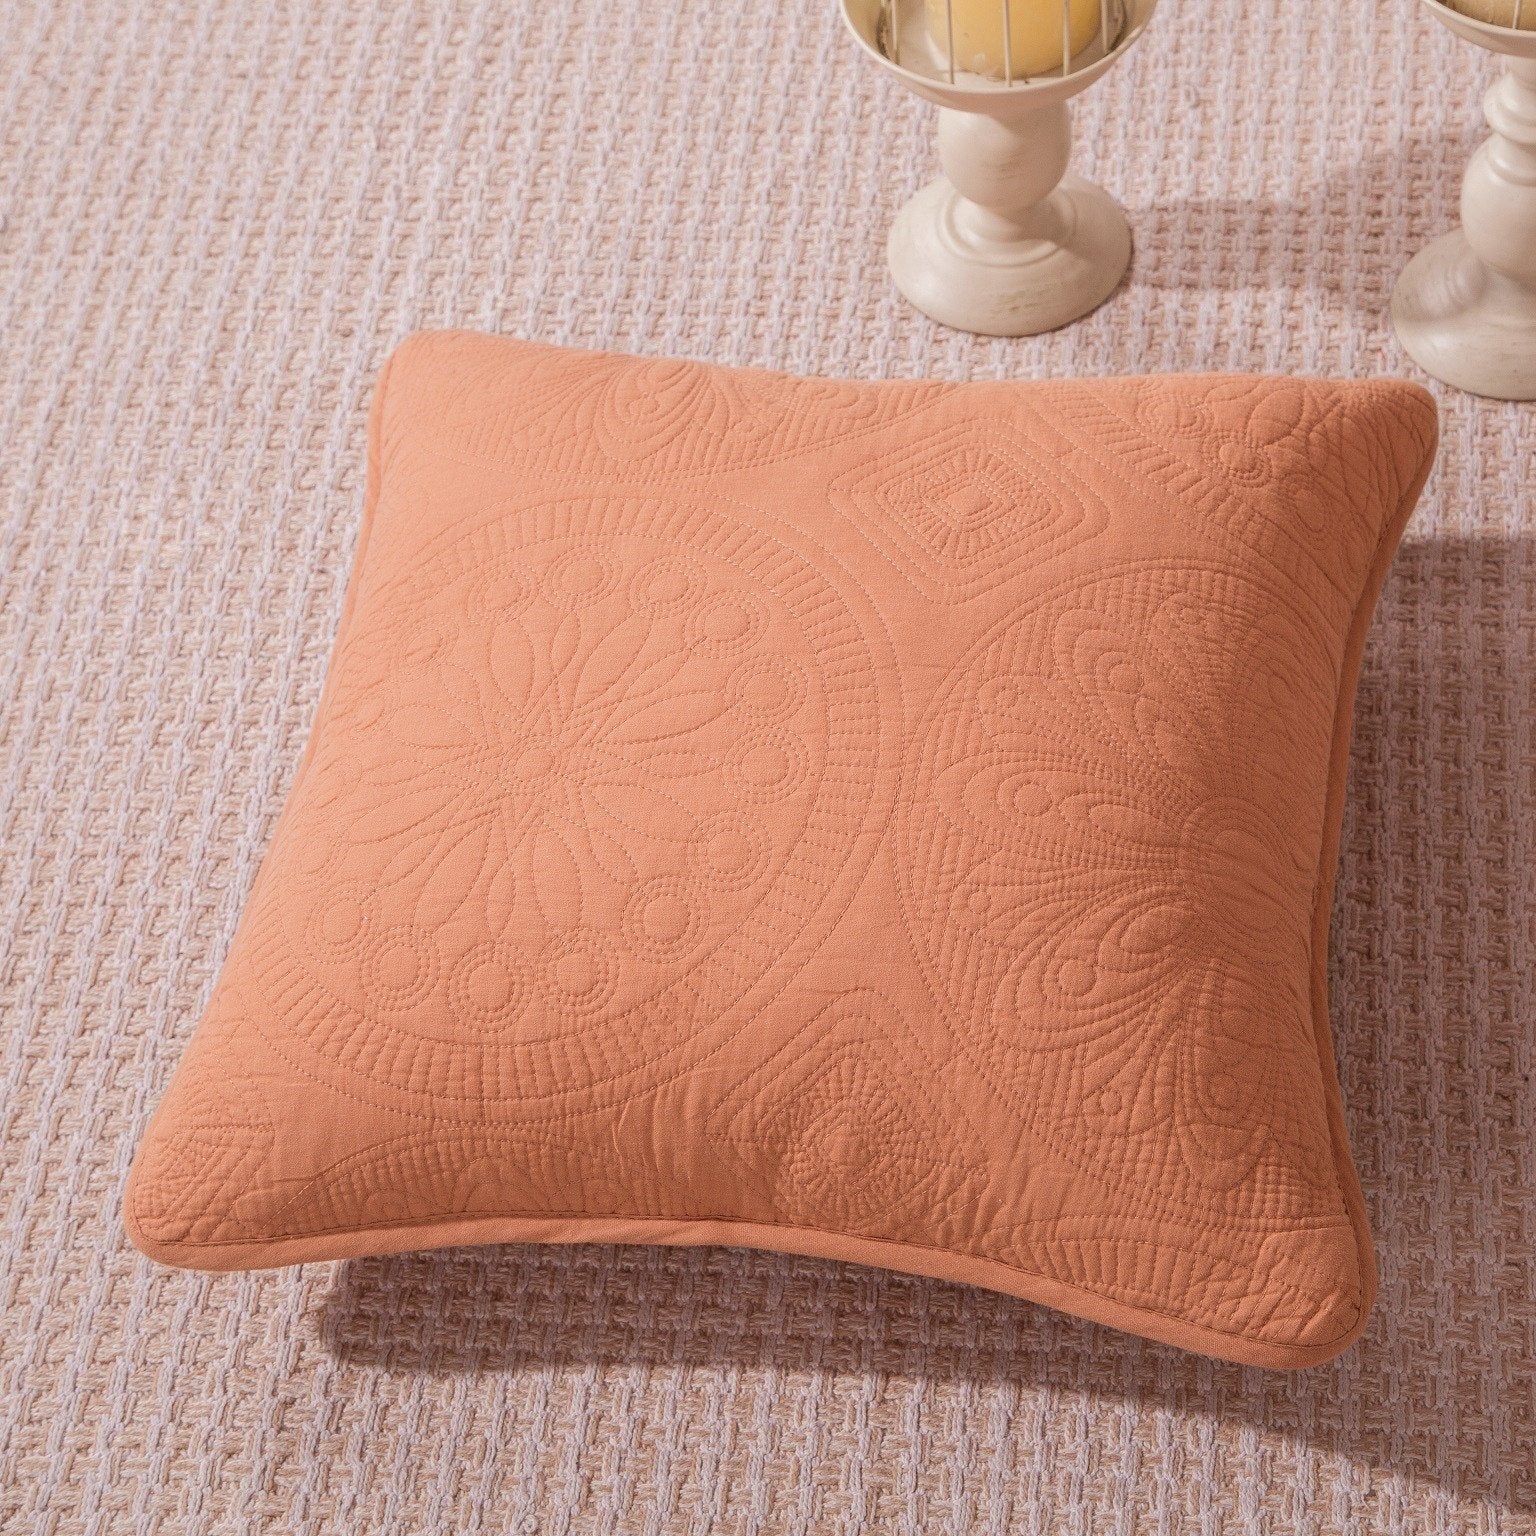 Tache Cotton Stone Washed Rustic Orange Medallion Tuscany Sunrise Cushion Covers / Euro Sham (JHW-595) - Tache Home Fashion